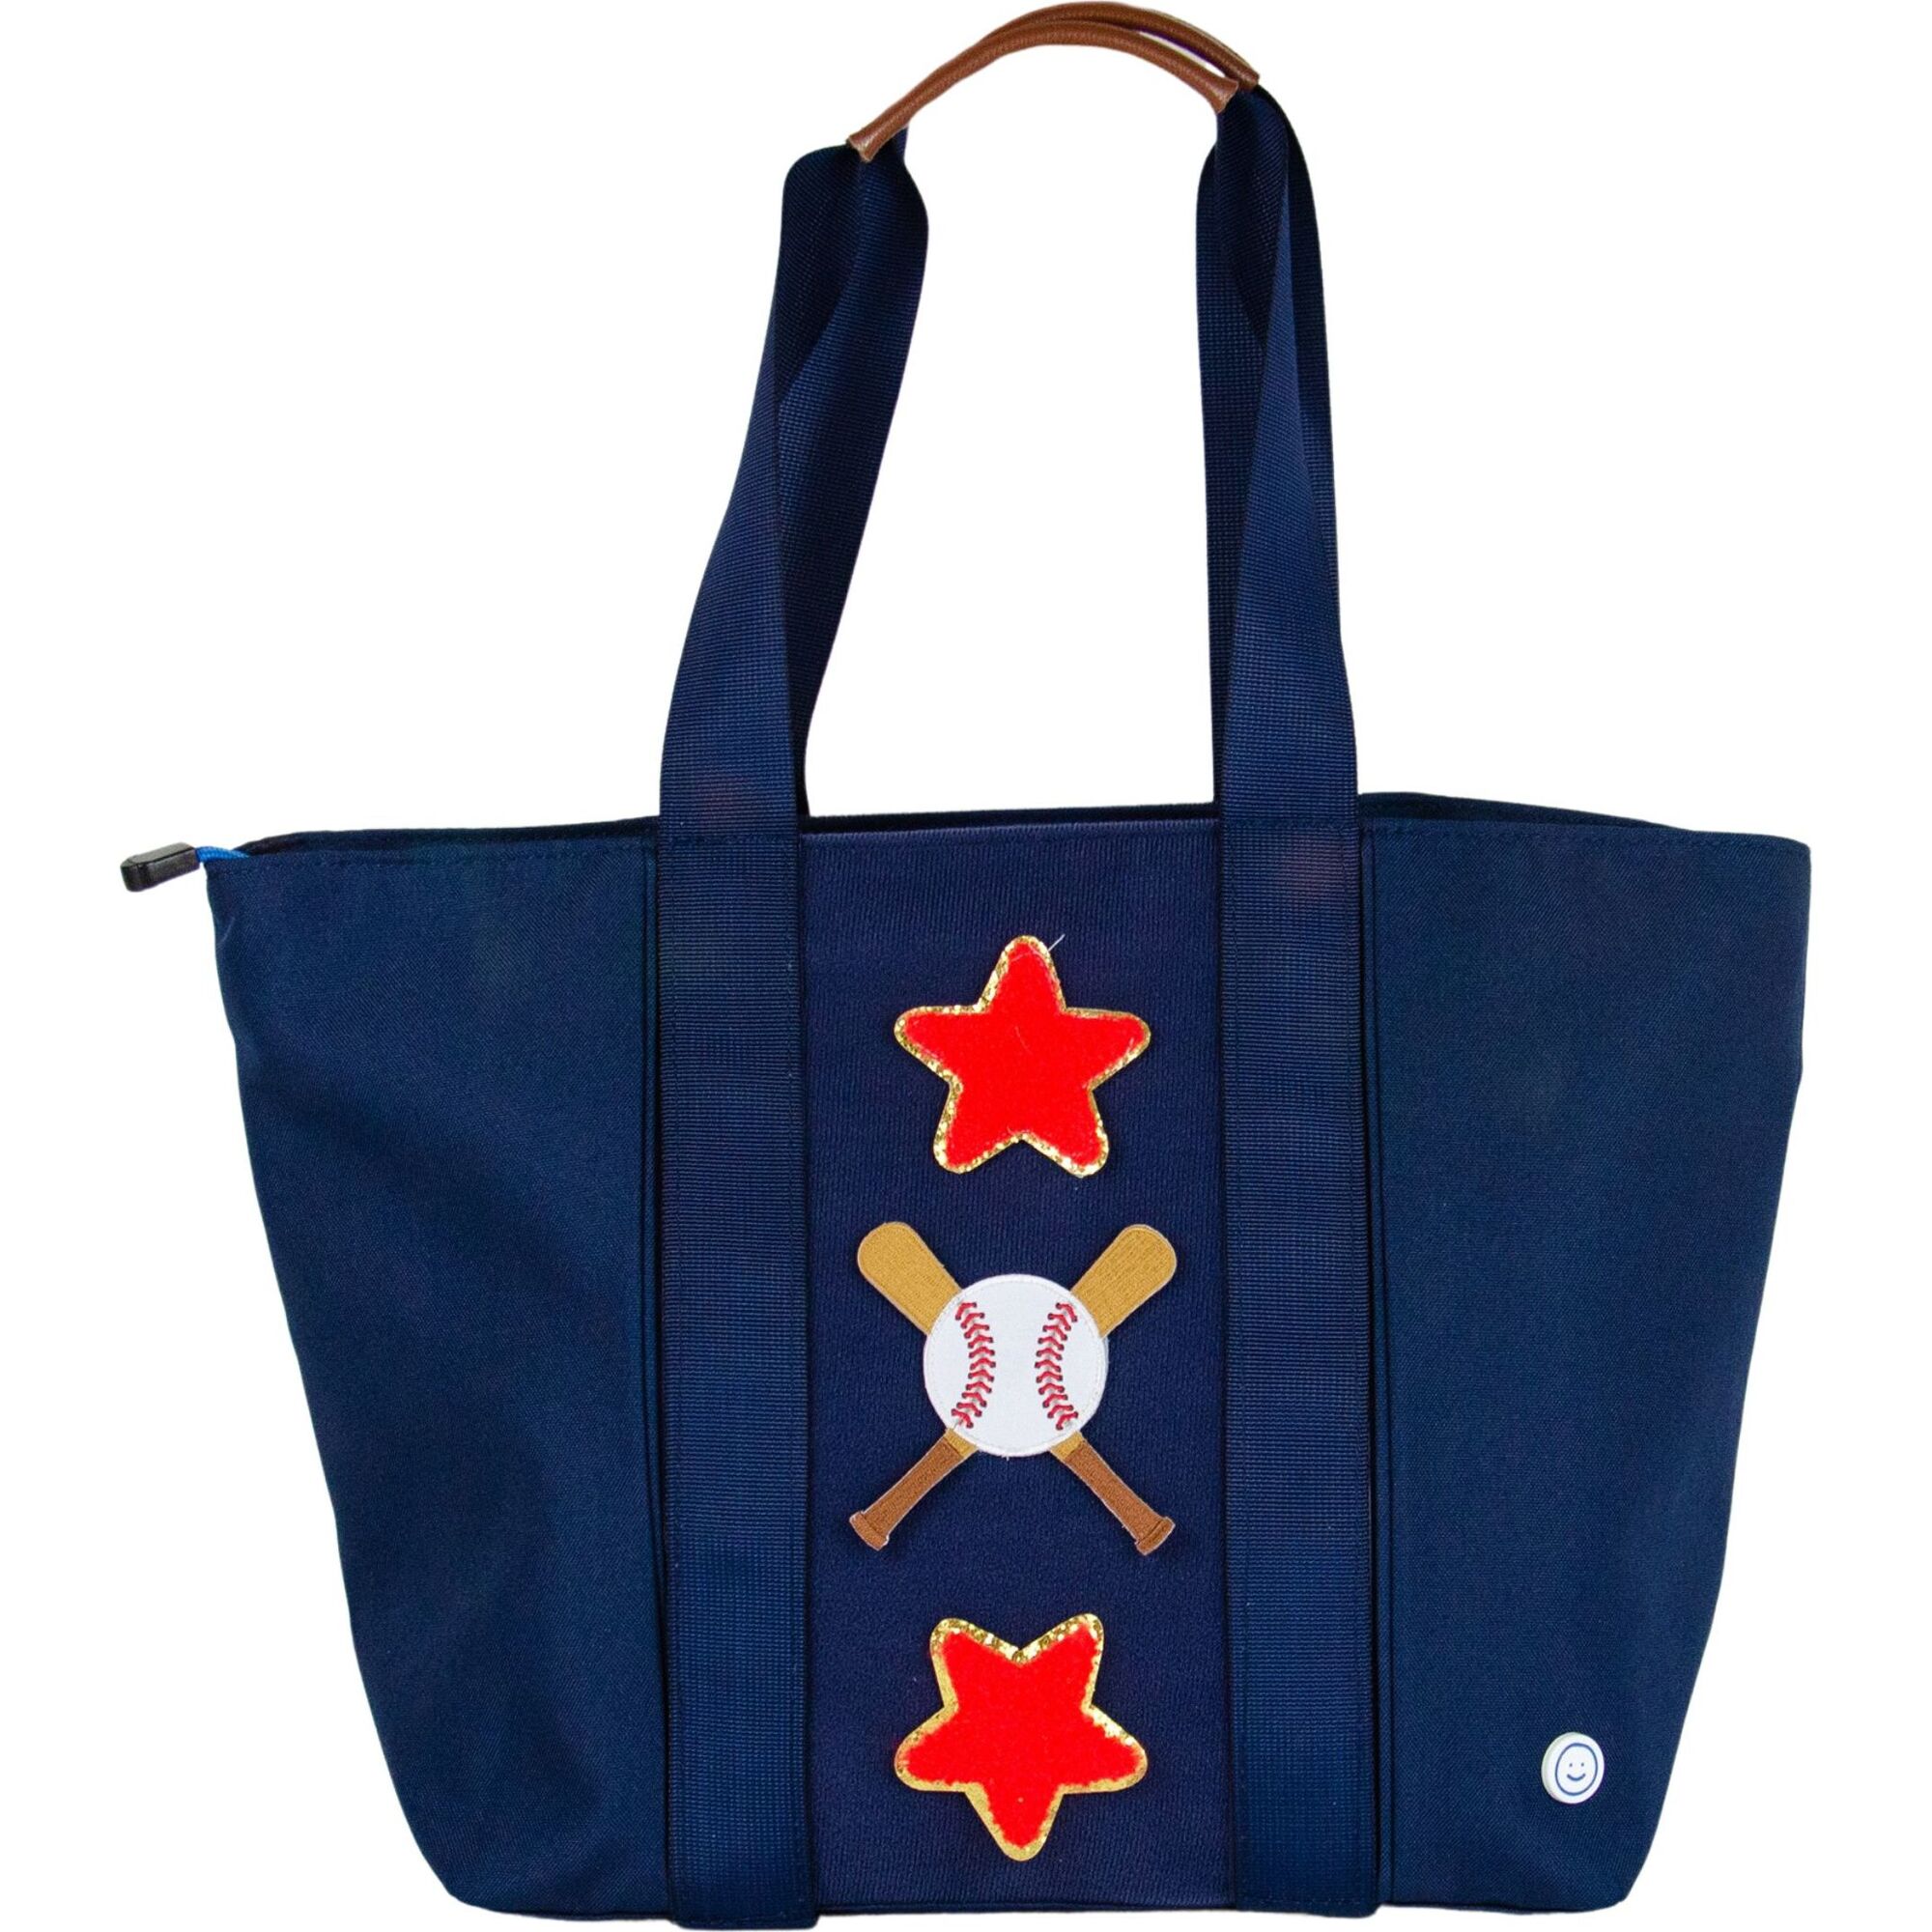 Becco Bags | Hook & Loop Sport Kids Backpack, Navy Blue and Magenta | Maisonette